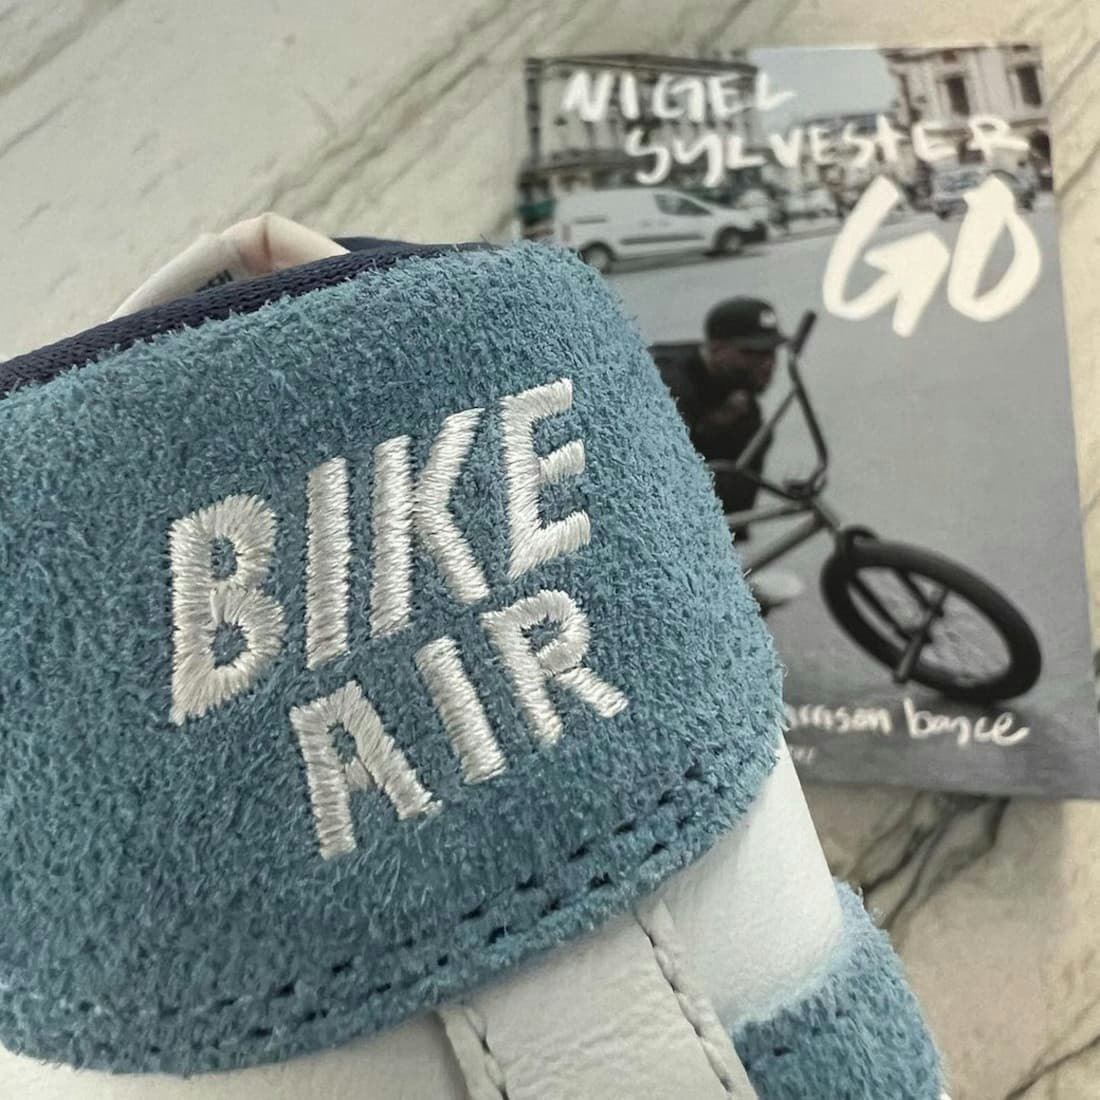 Nigel Sylvester x Nike Air Ship “Bike Air”